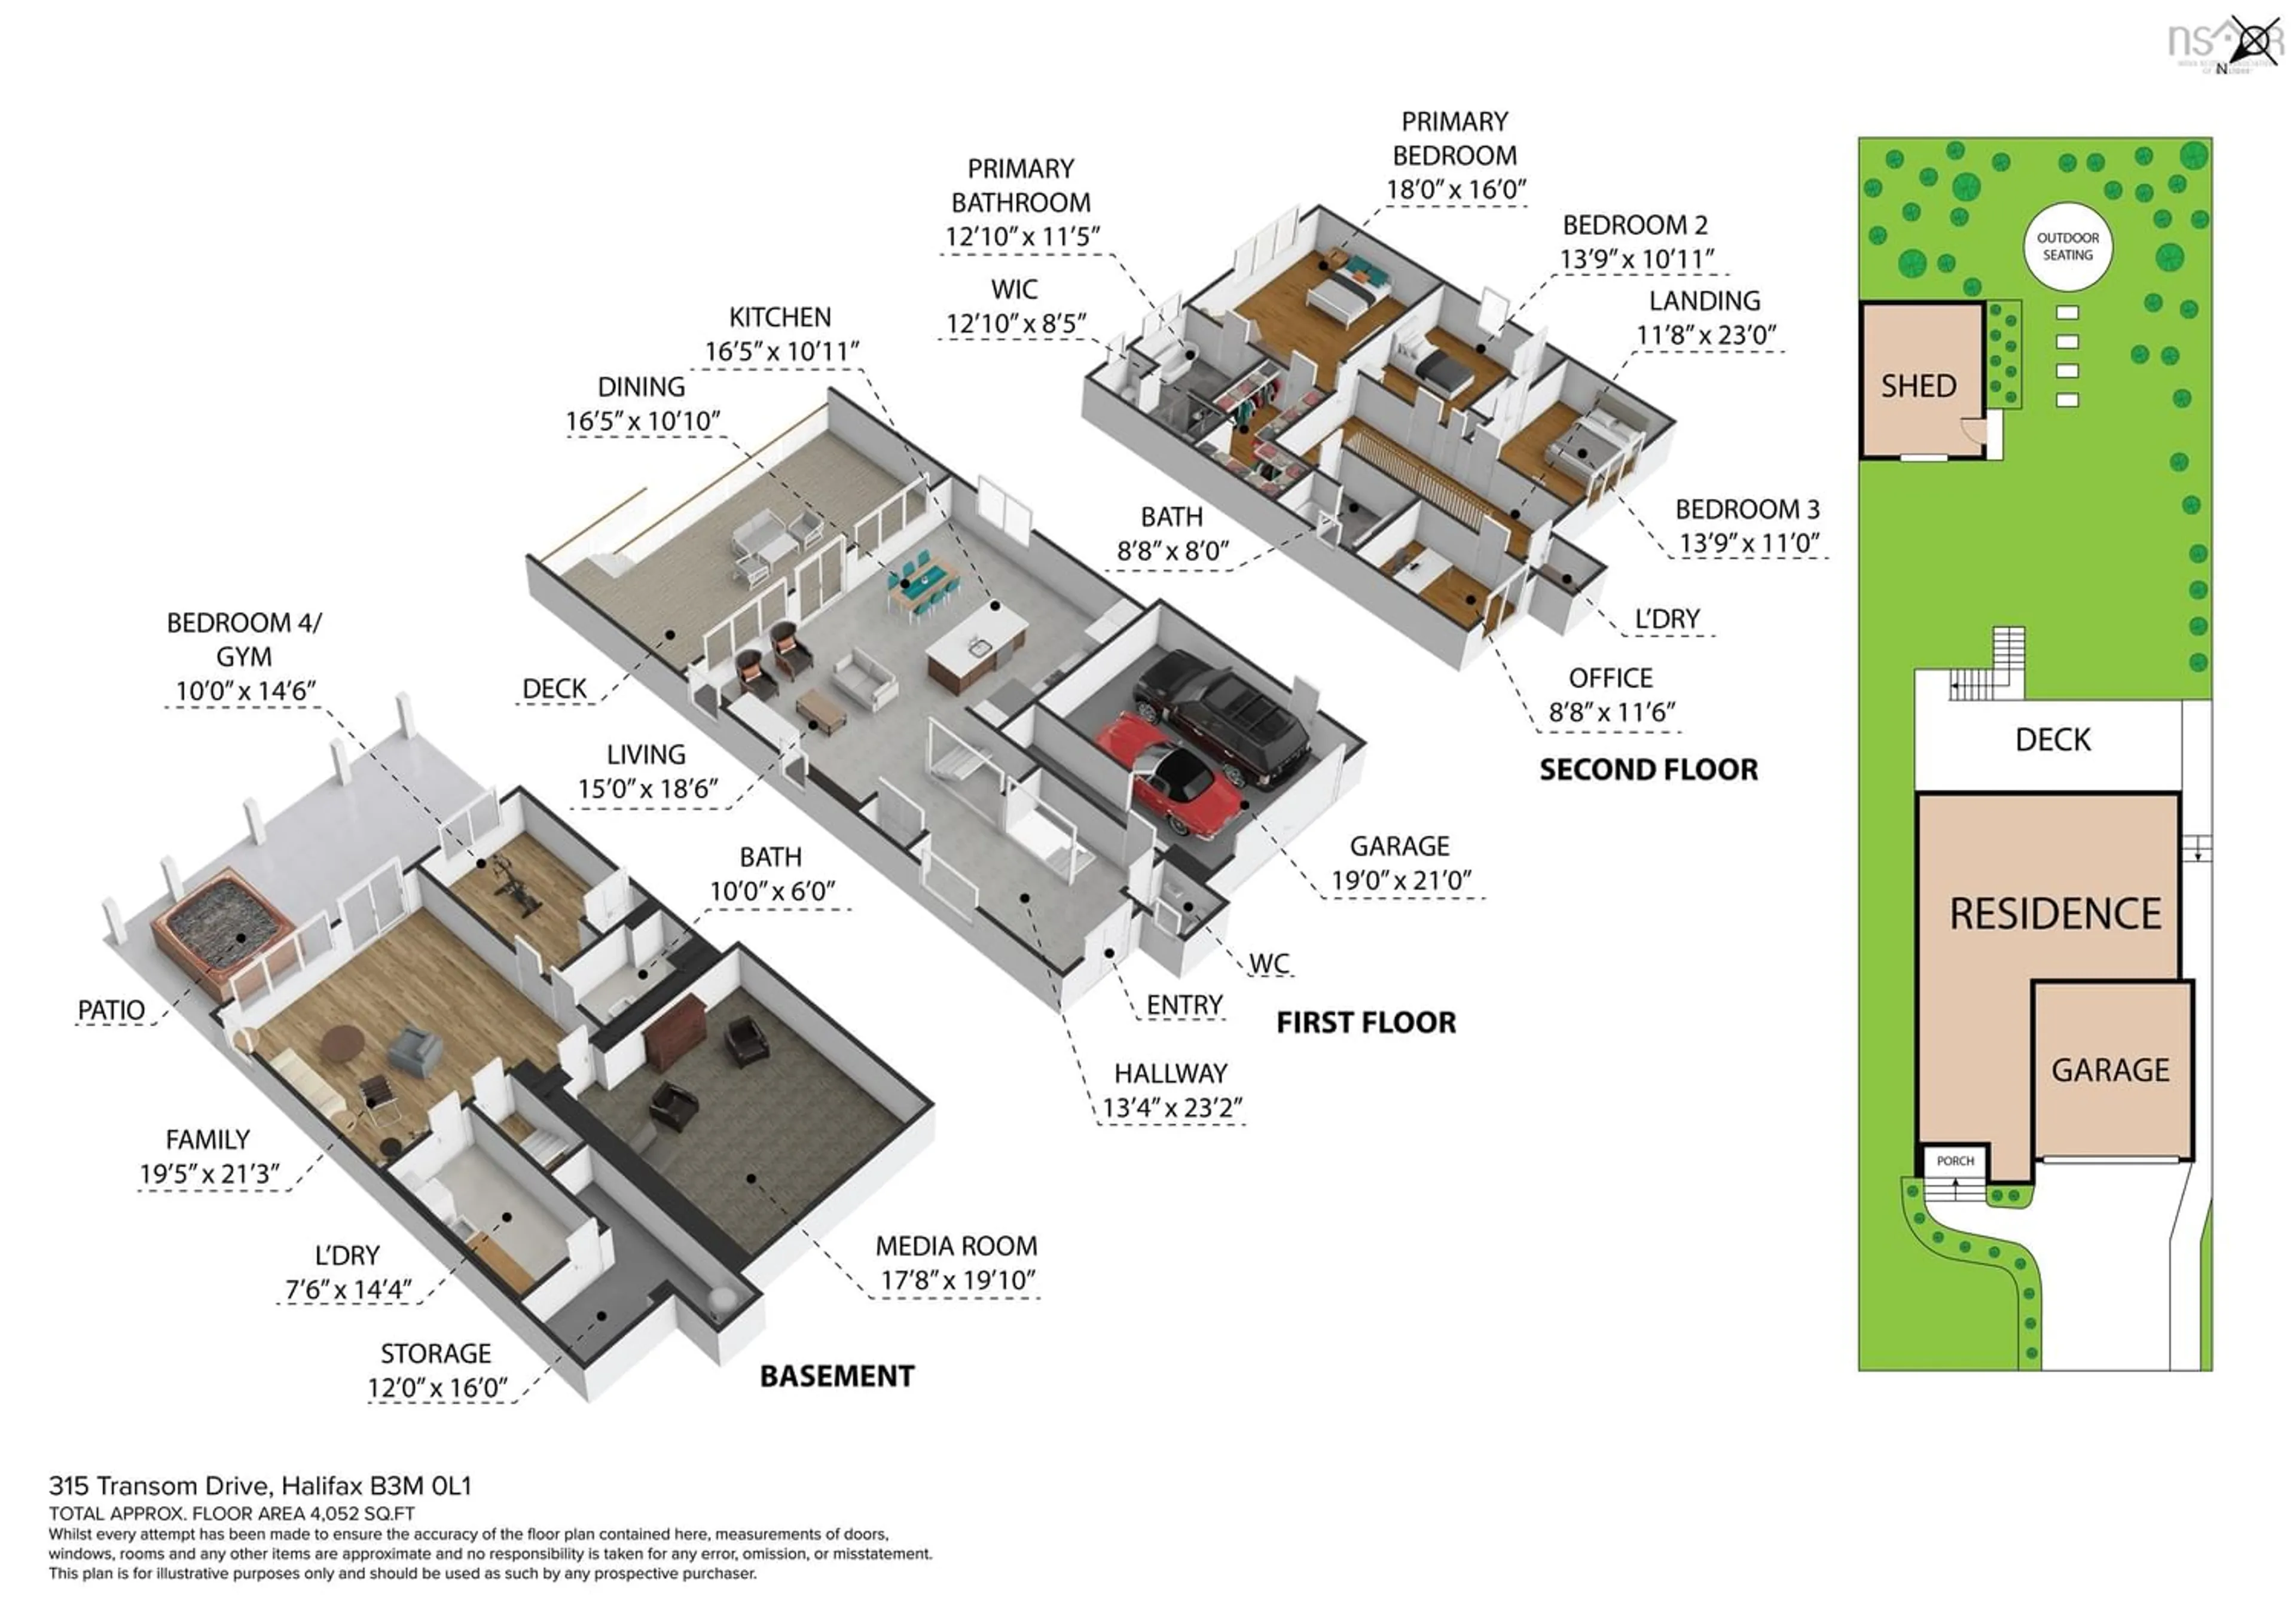 Floor plan for 315 Transom Dr, Halifax Nova Scotia B3M 0L1